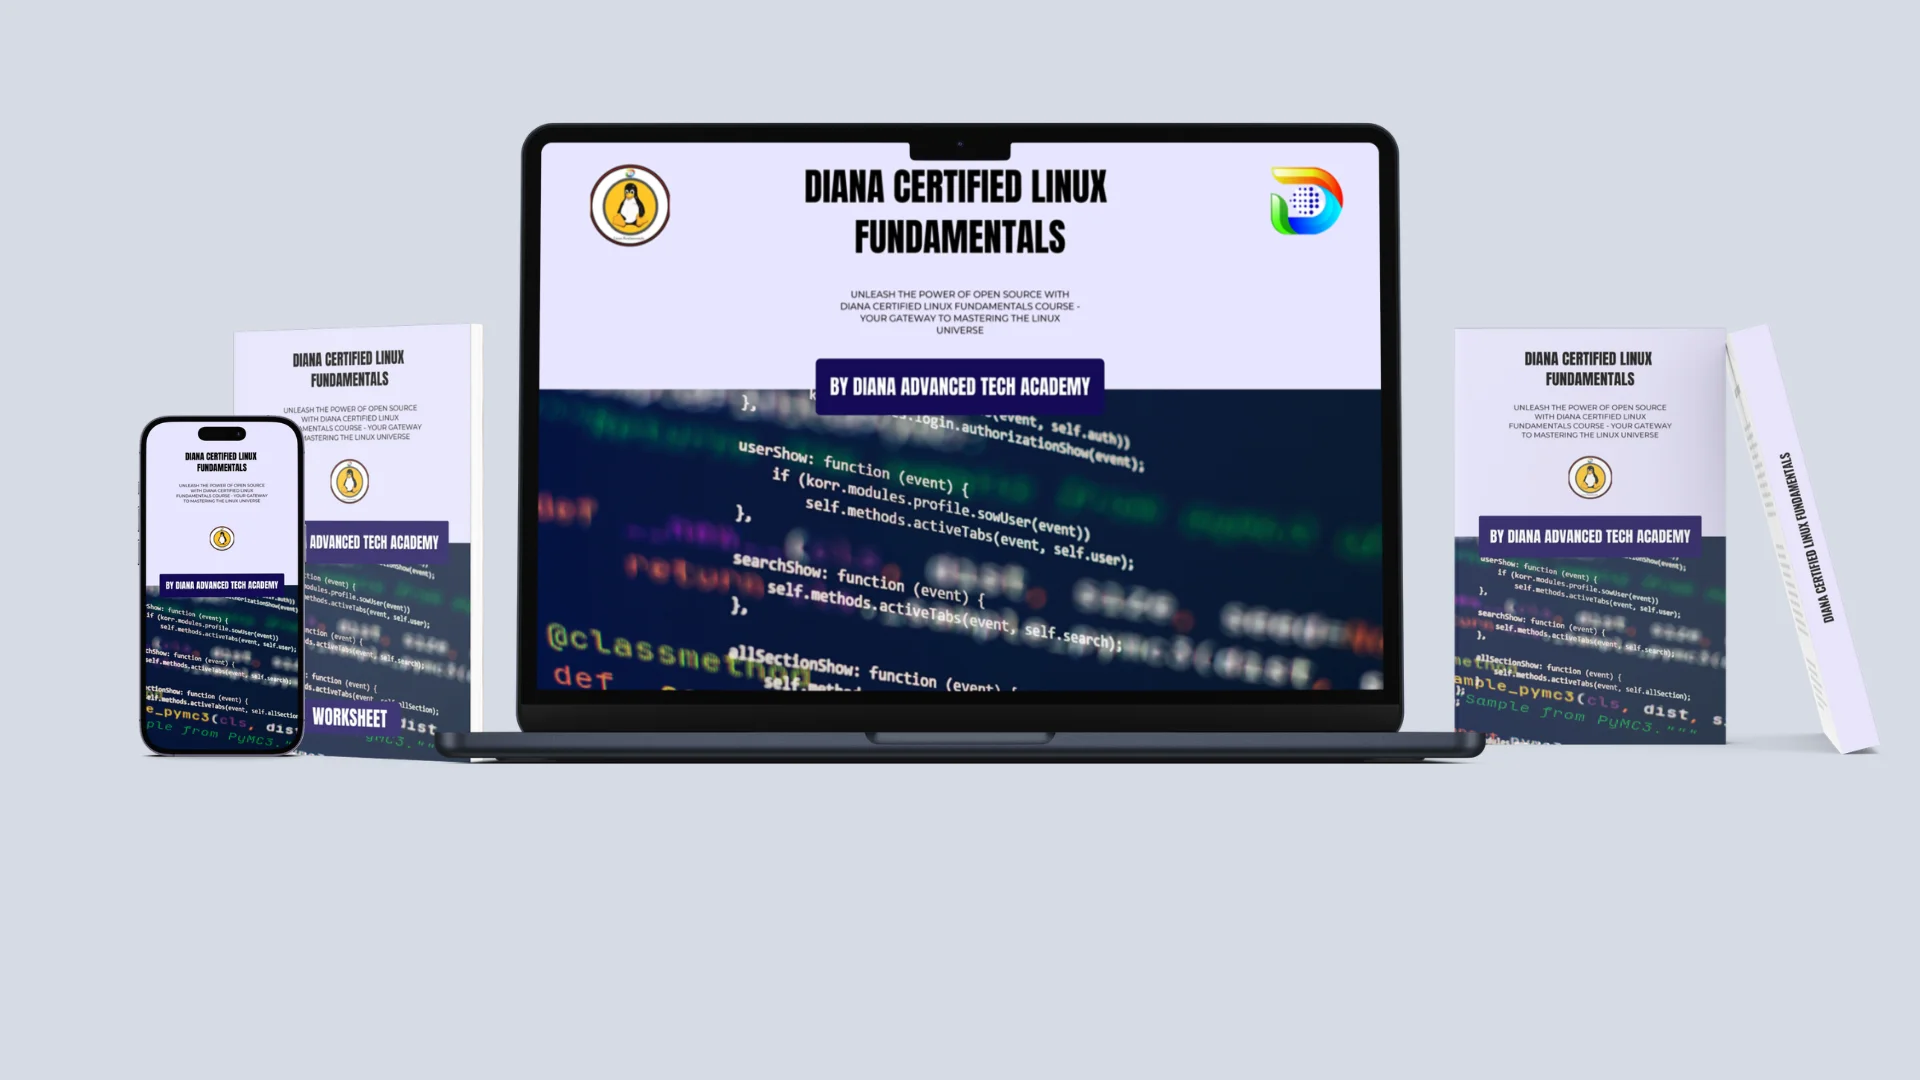 Diana Certified Linux Fundamentals